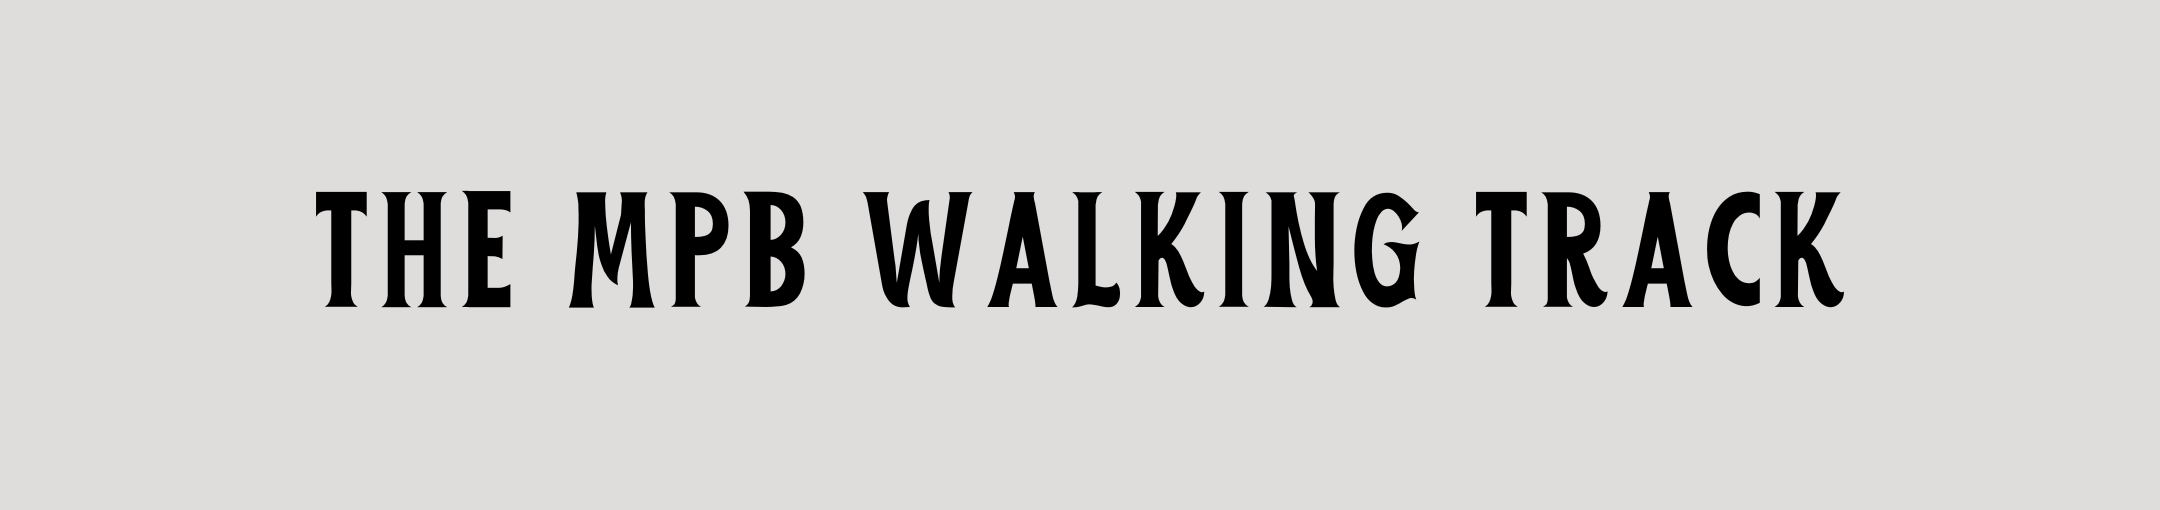 MPB walking track title on grey background